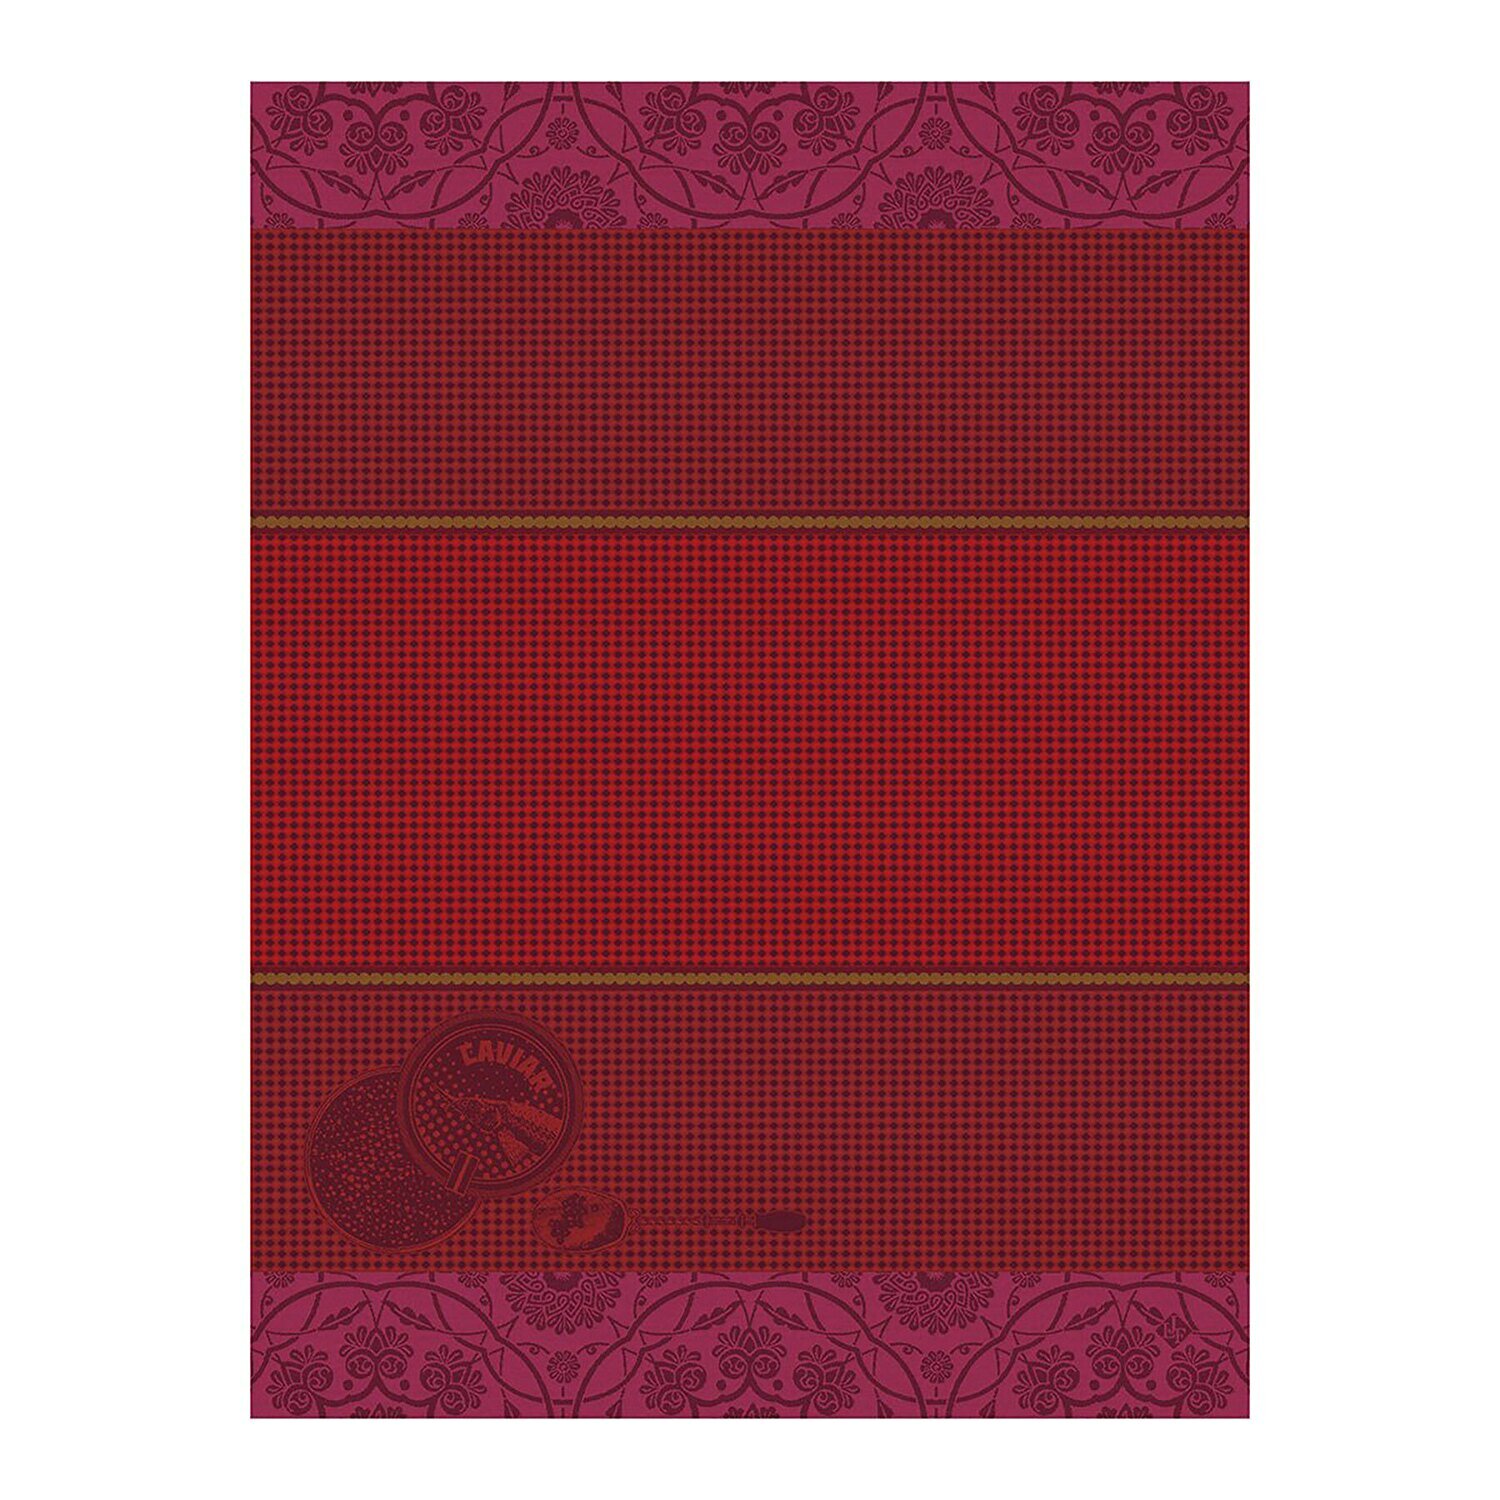 Le Jacquard Francais Hand Towel Tsar Red 100% Cotton 27197 Set of 4